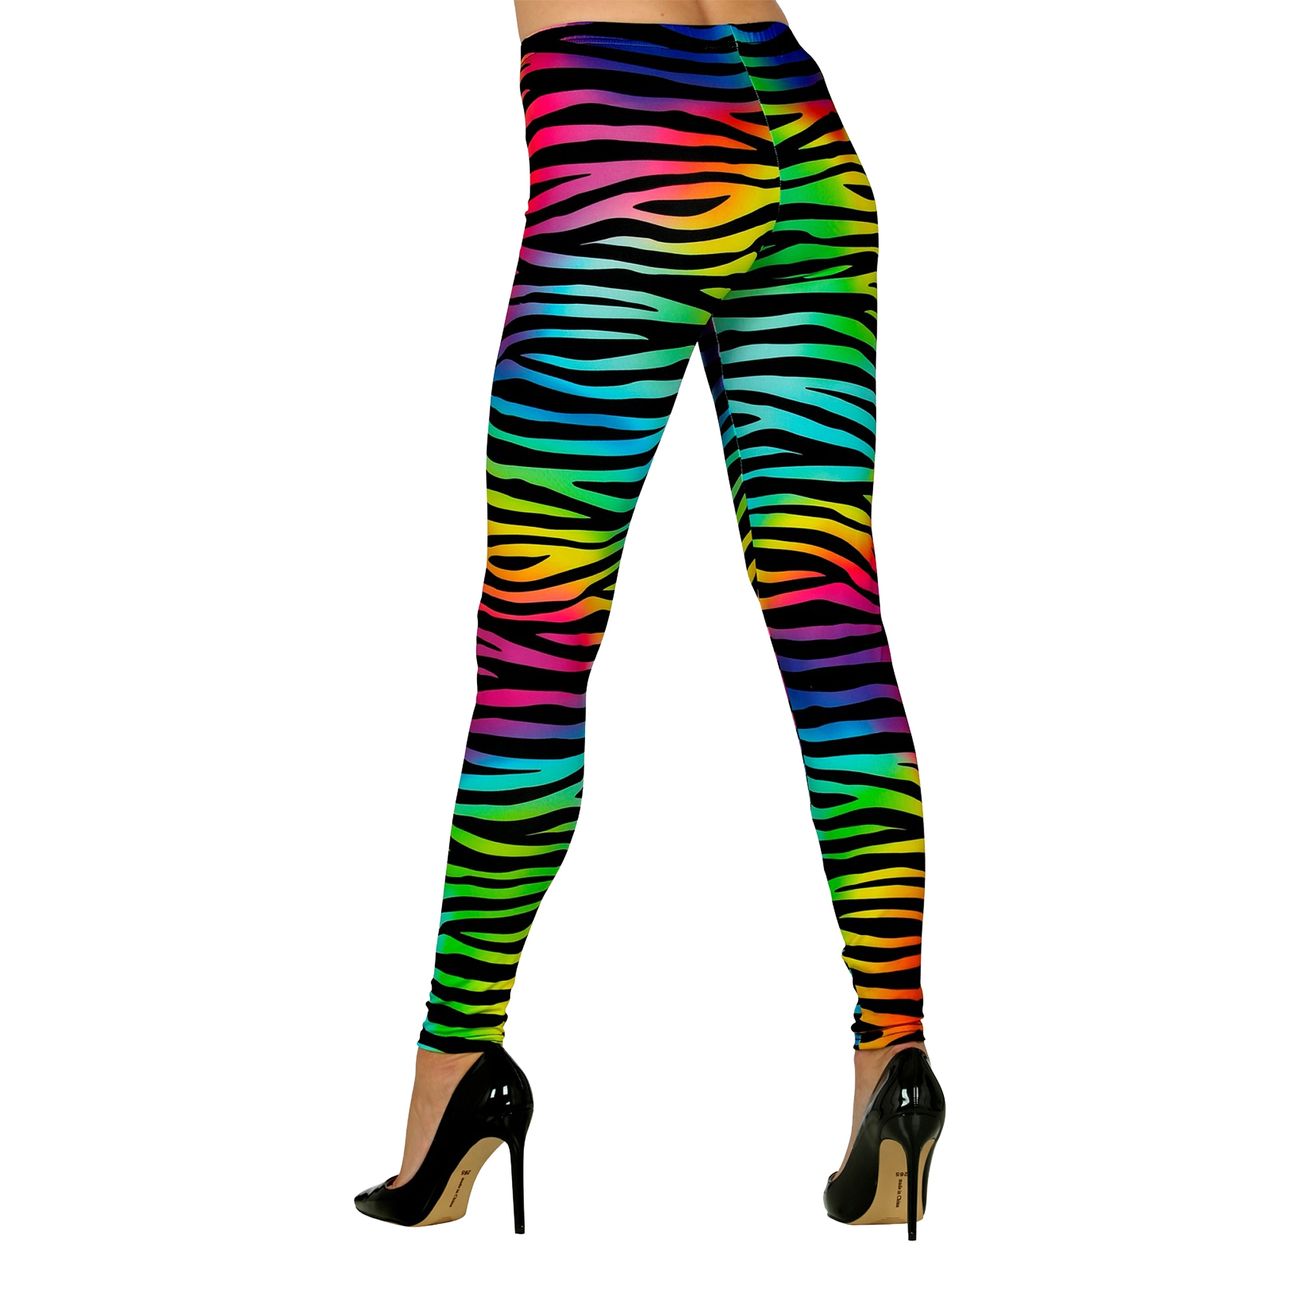 80-tals-leggings-zebramonstrad-87537-2